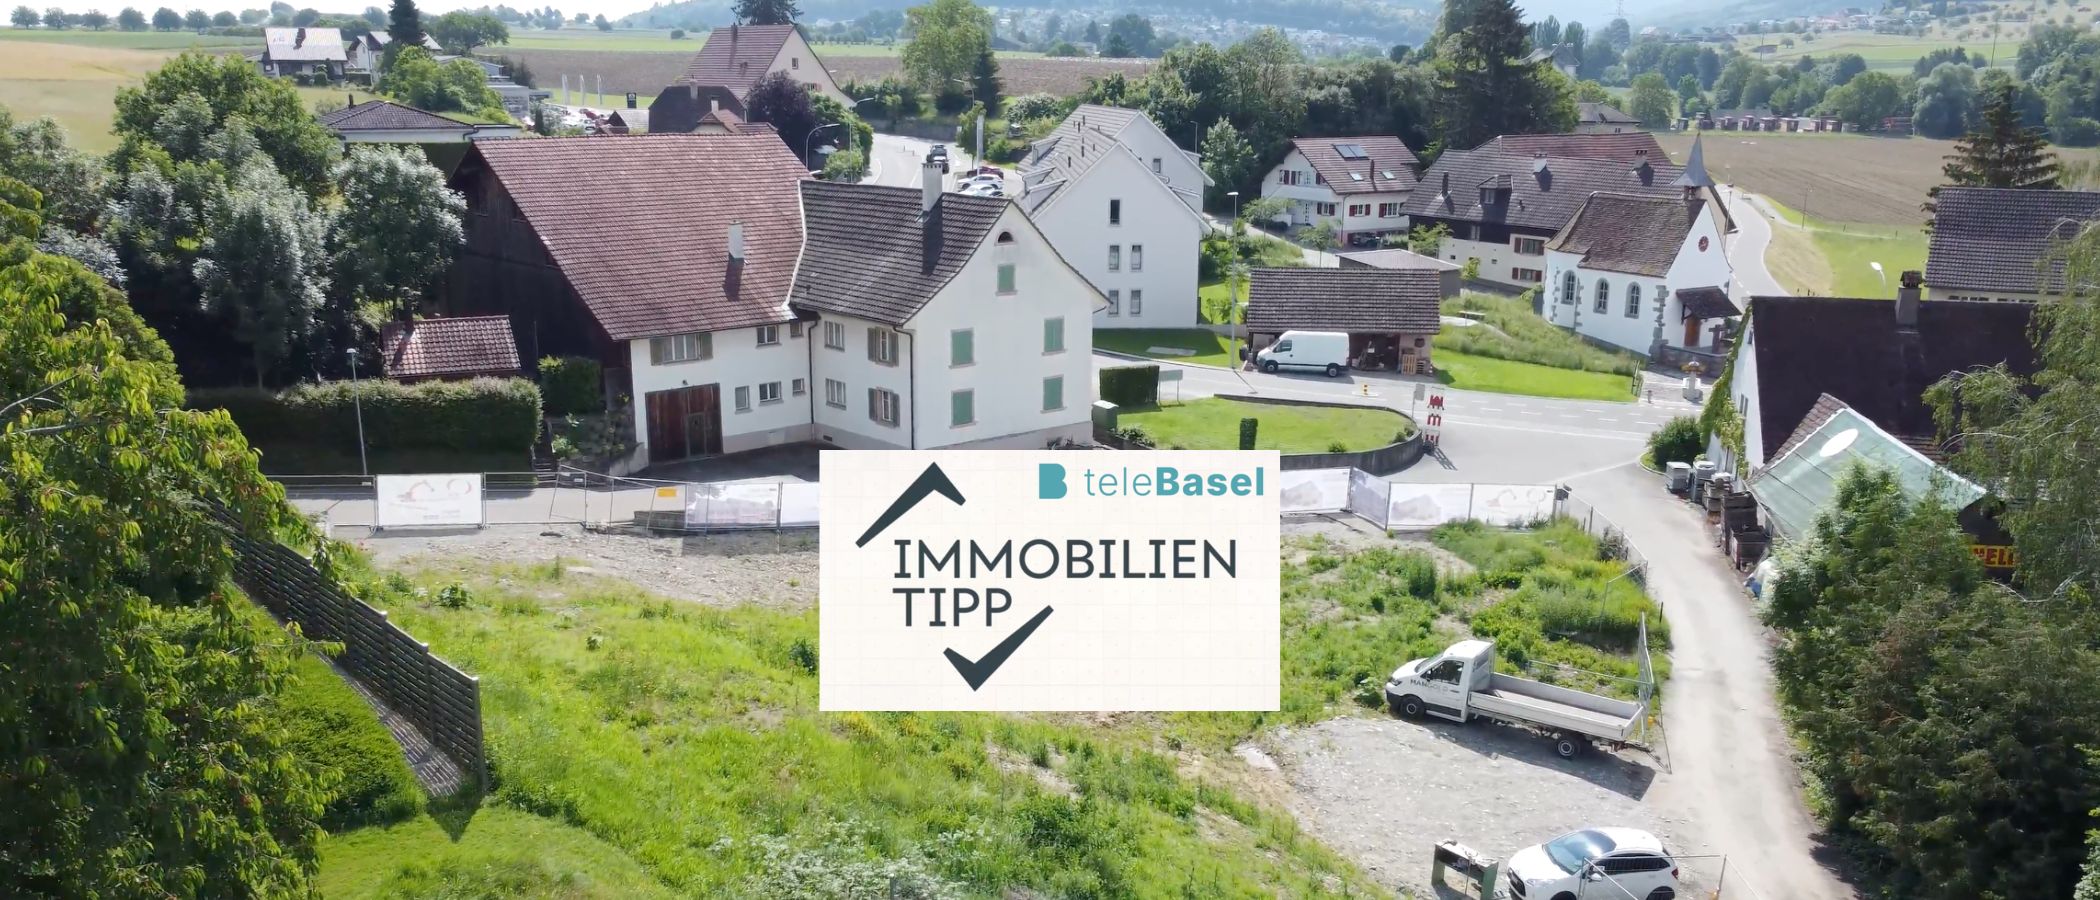 Immobilien-Tipp Tele Basel